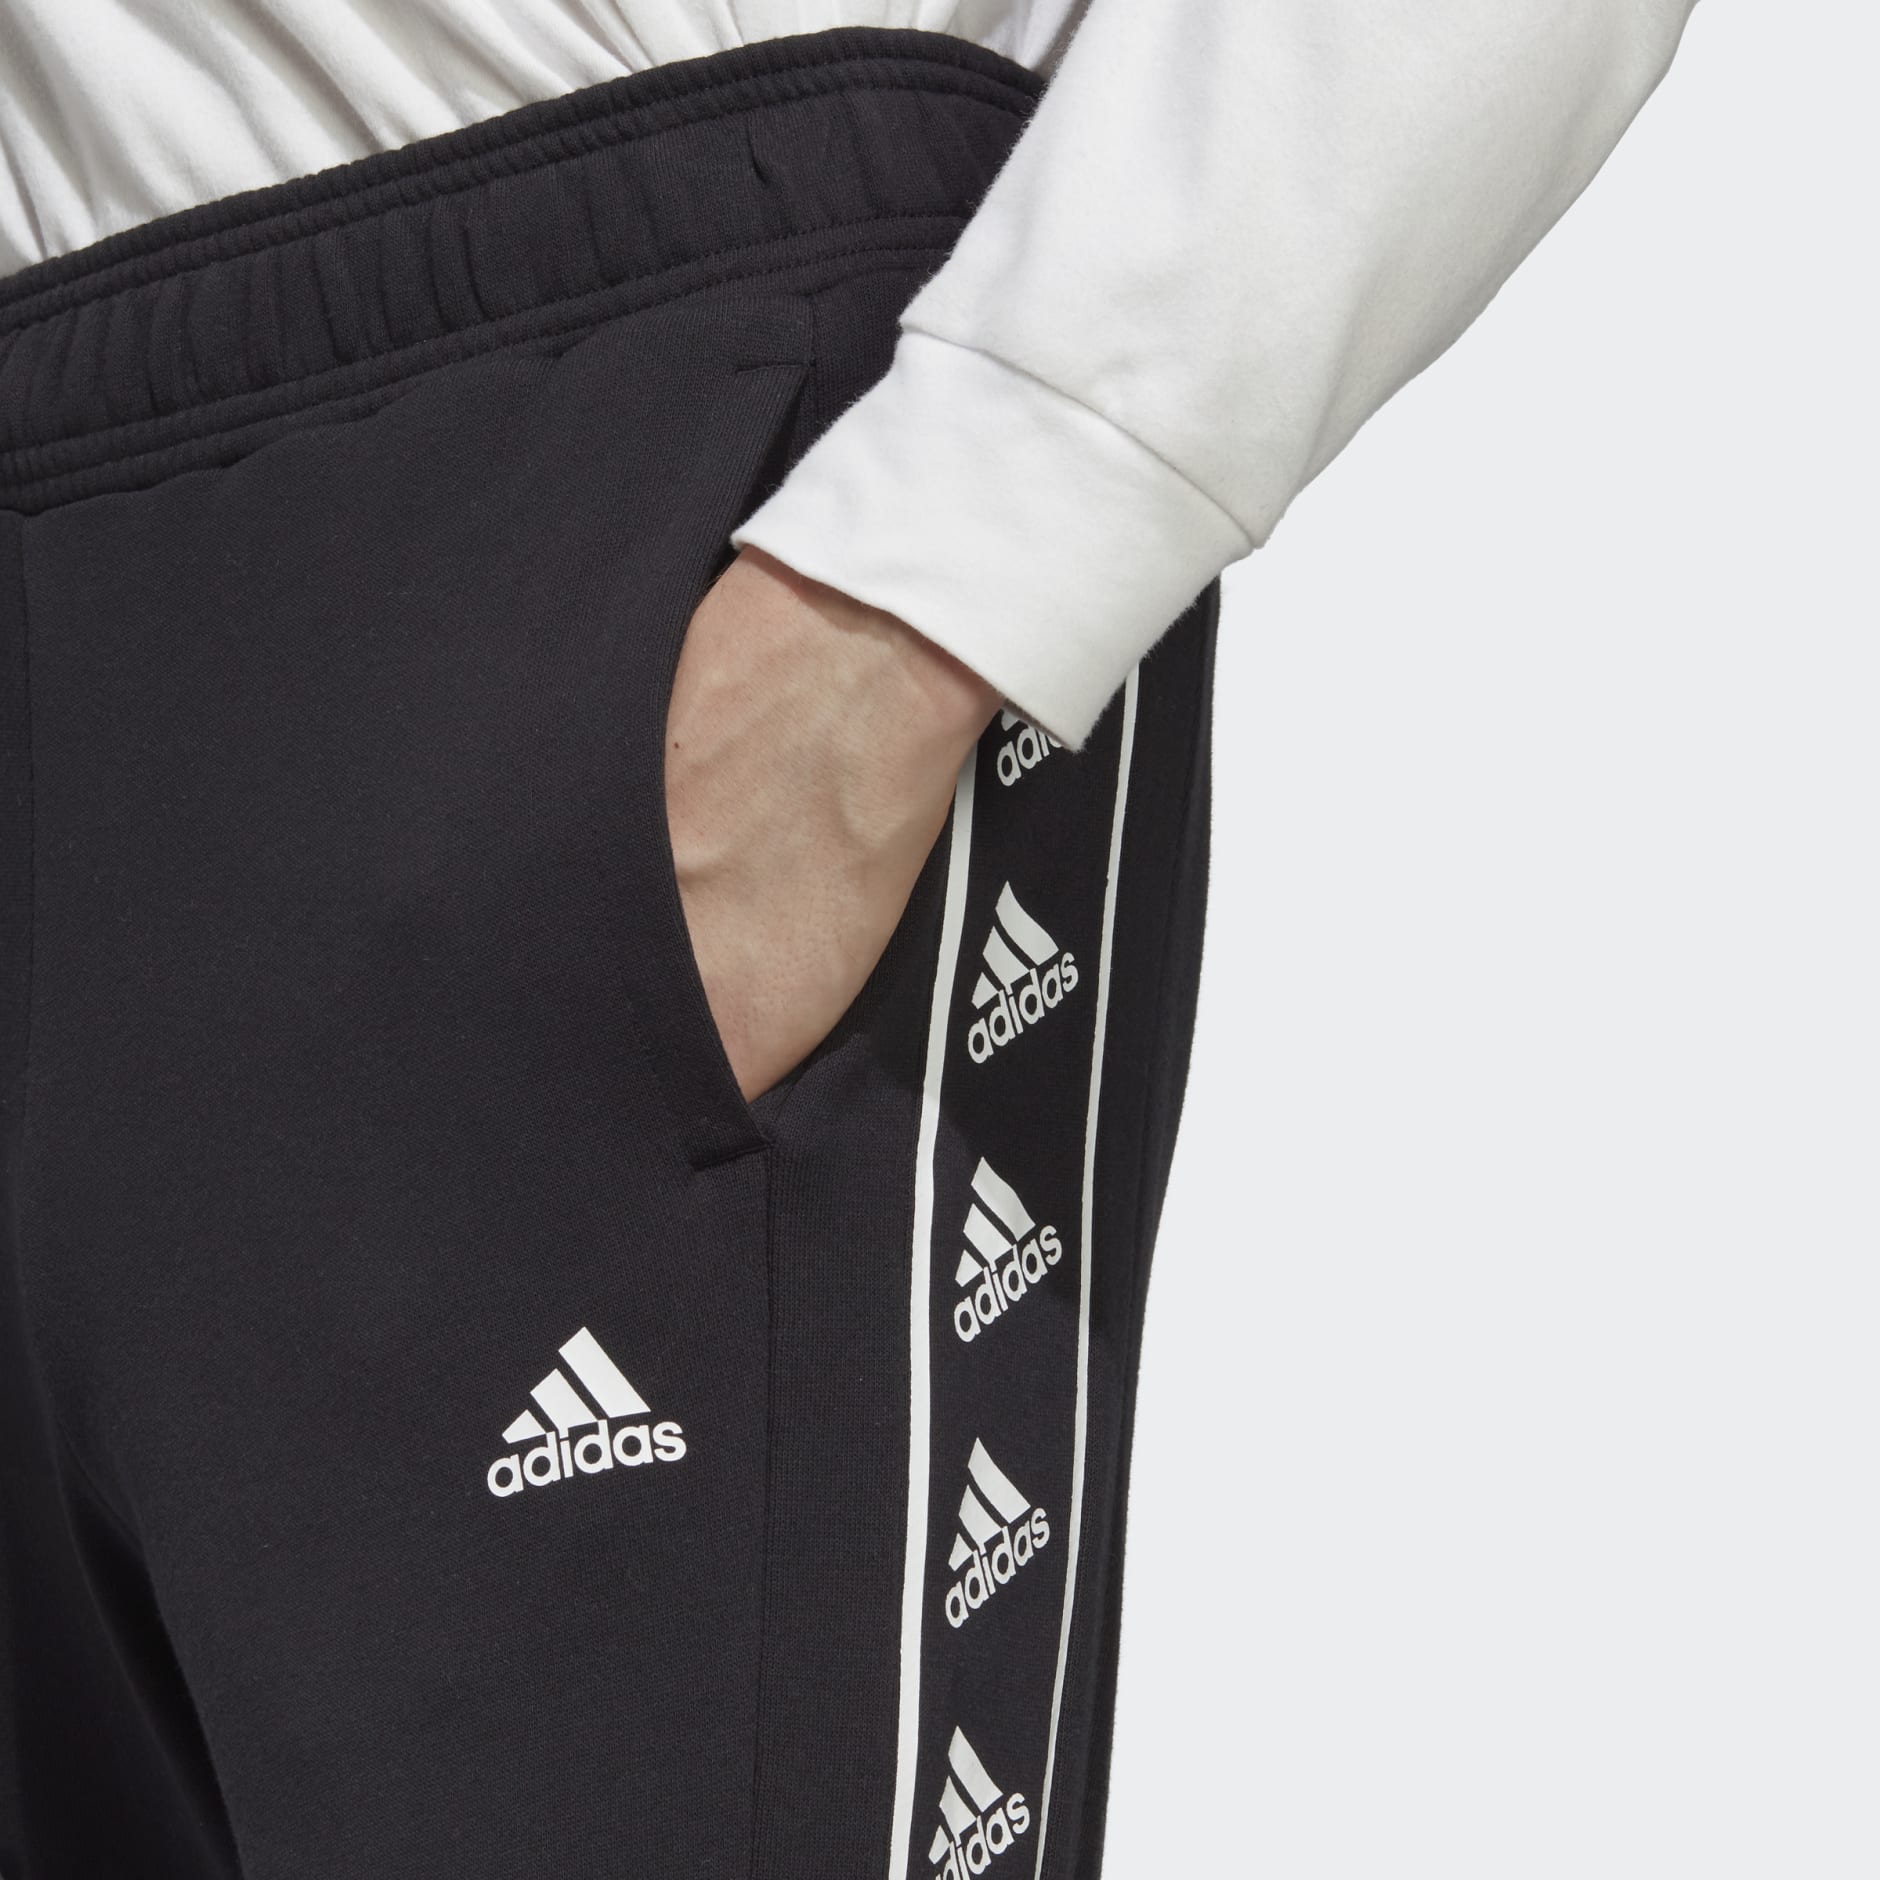 Clothing - Brandlove Pants - Black | adidas South Africa